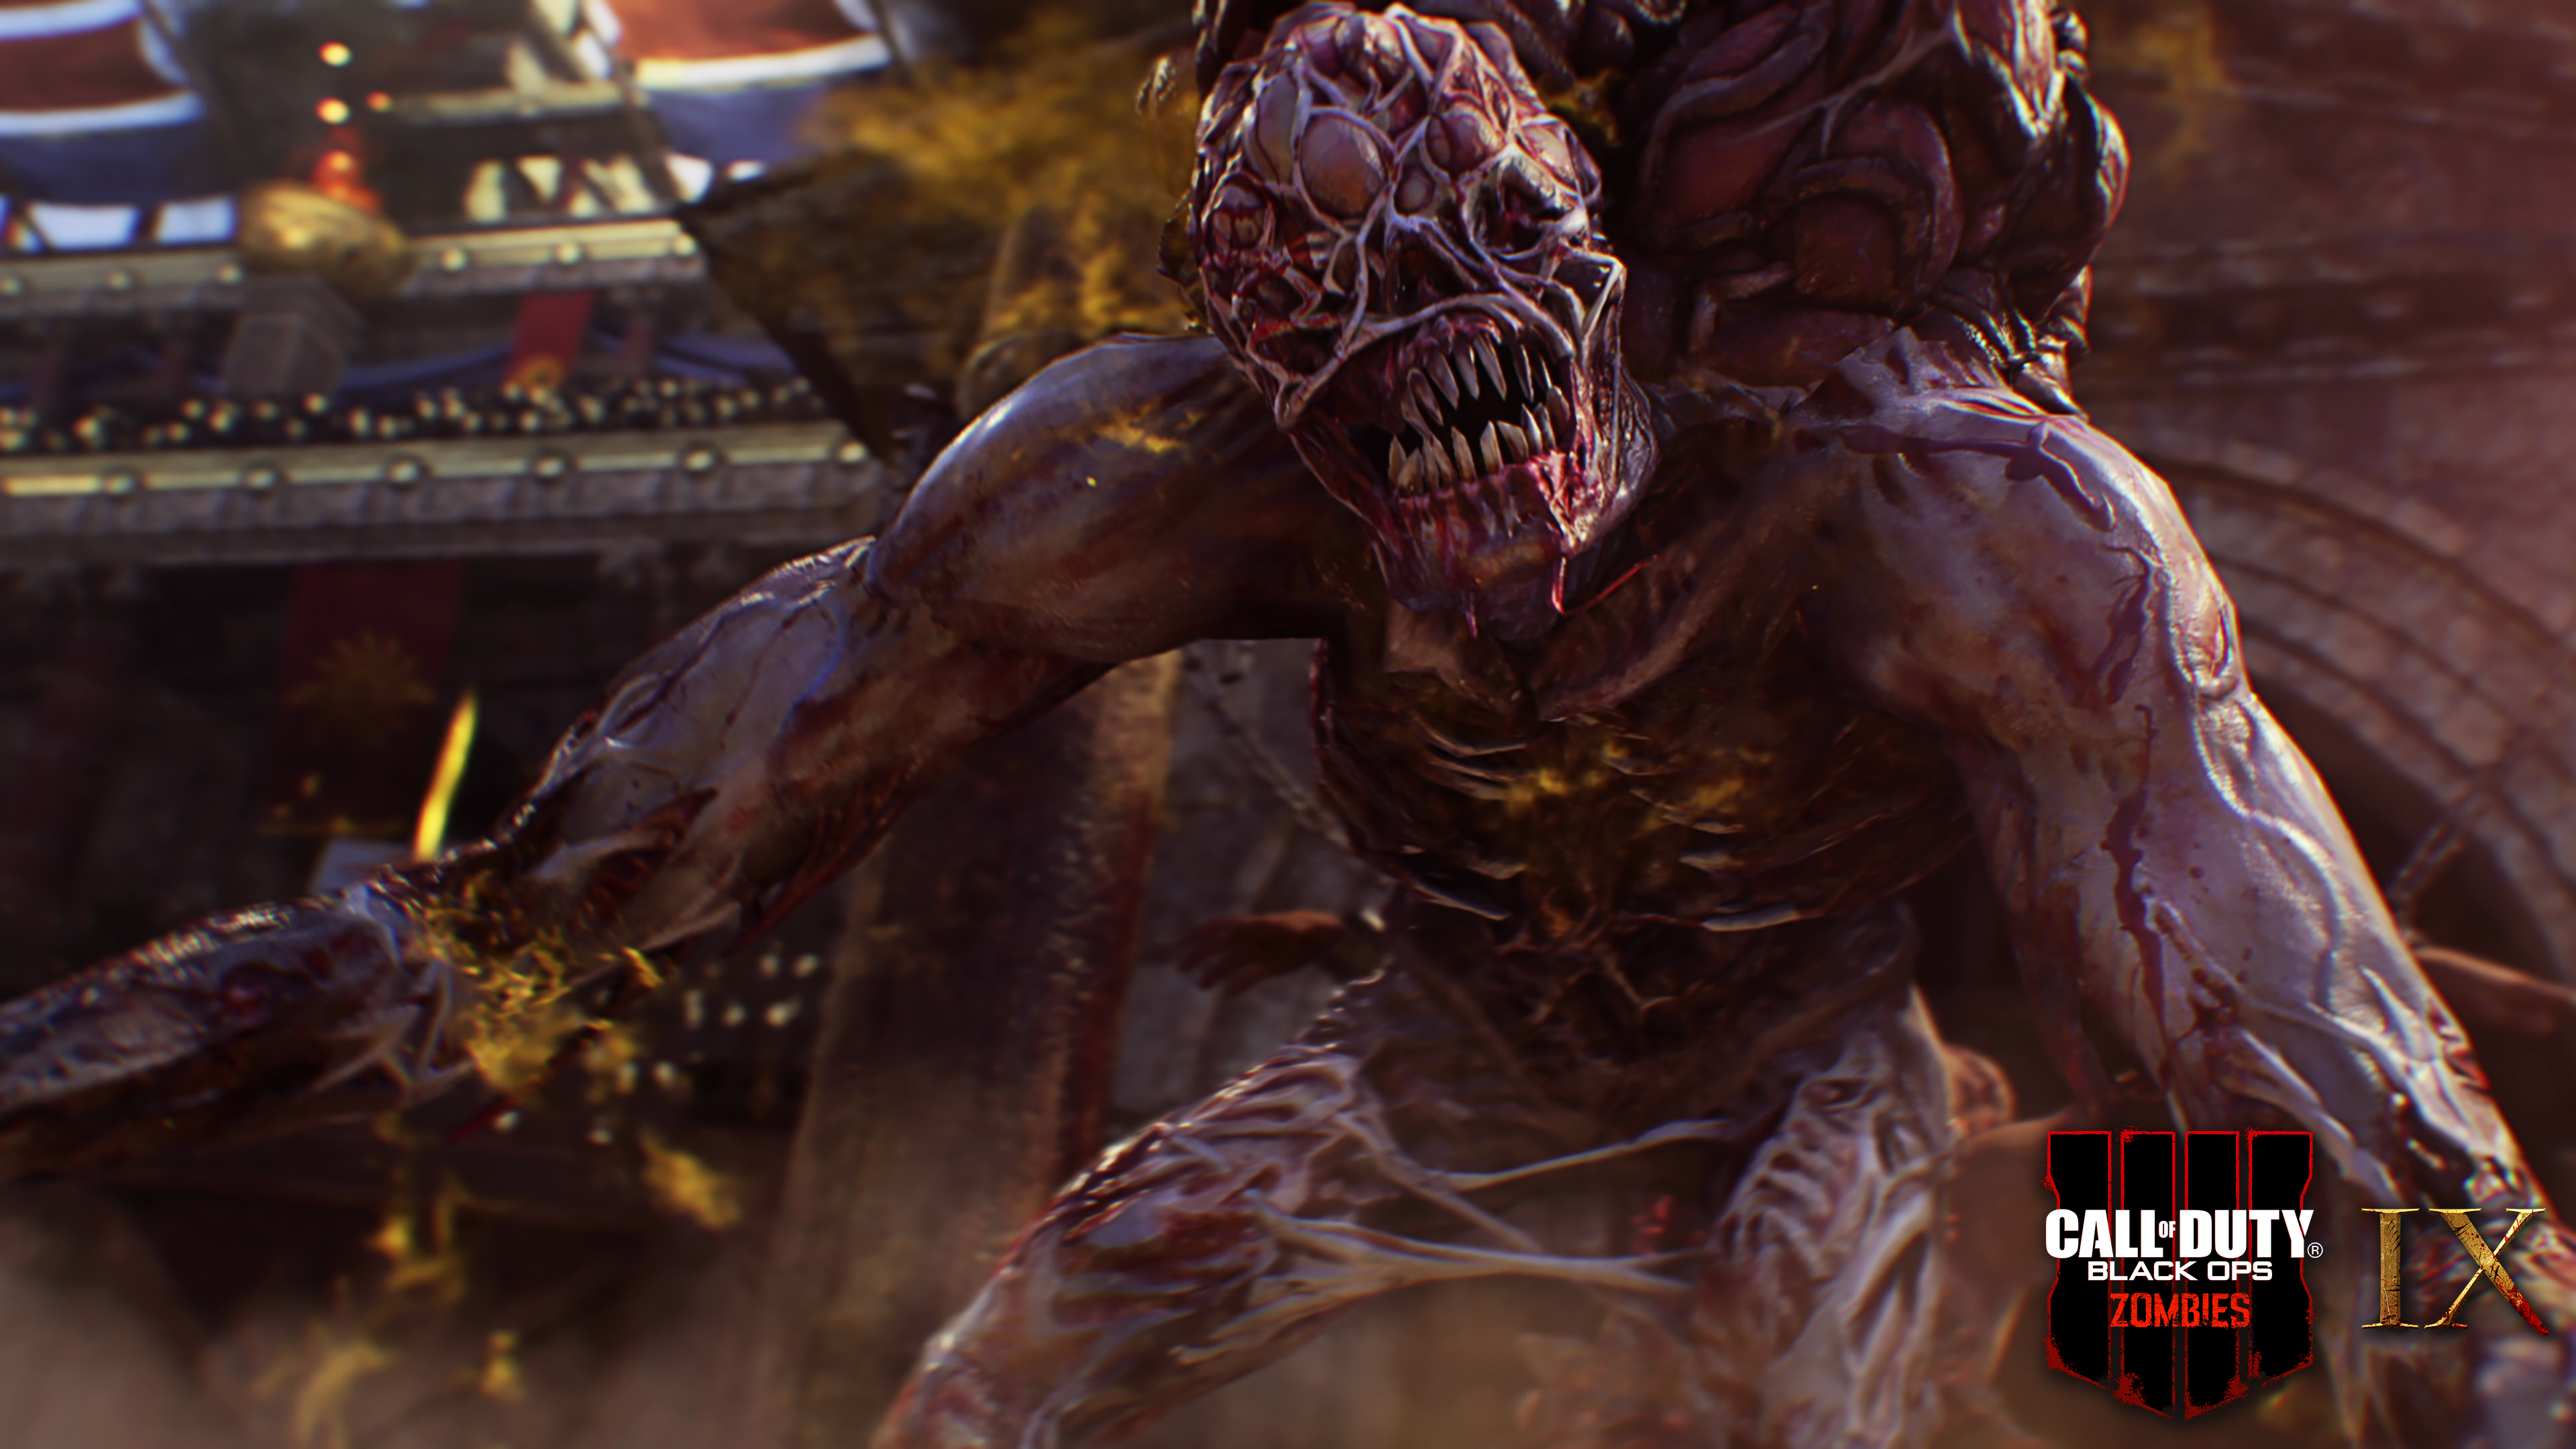 New Black Ops 4 roadmap zombies